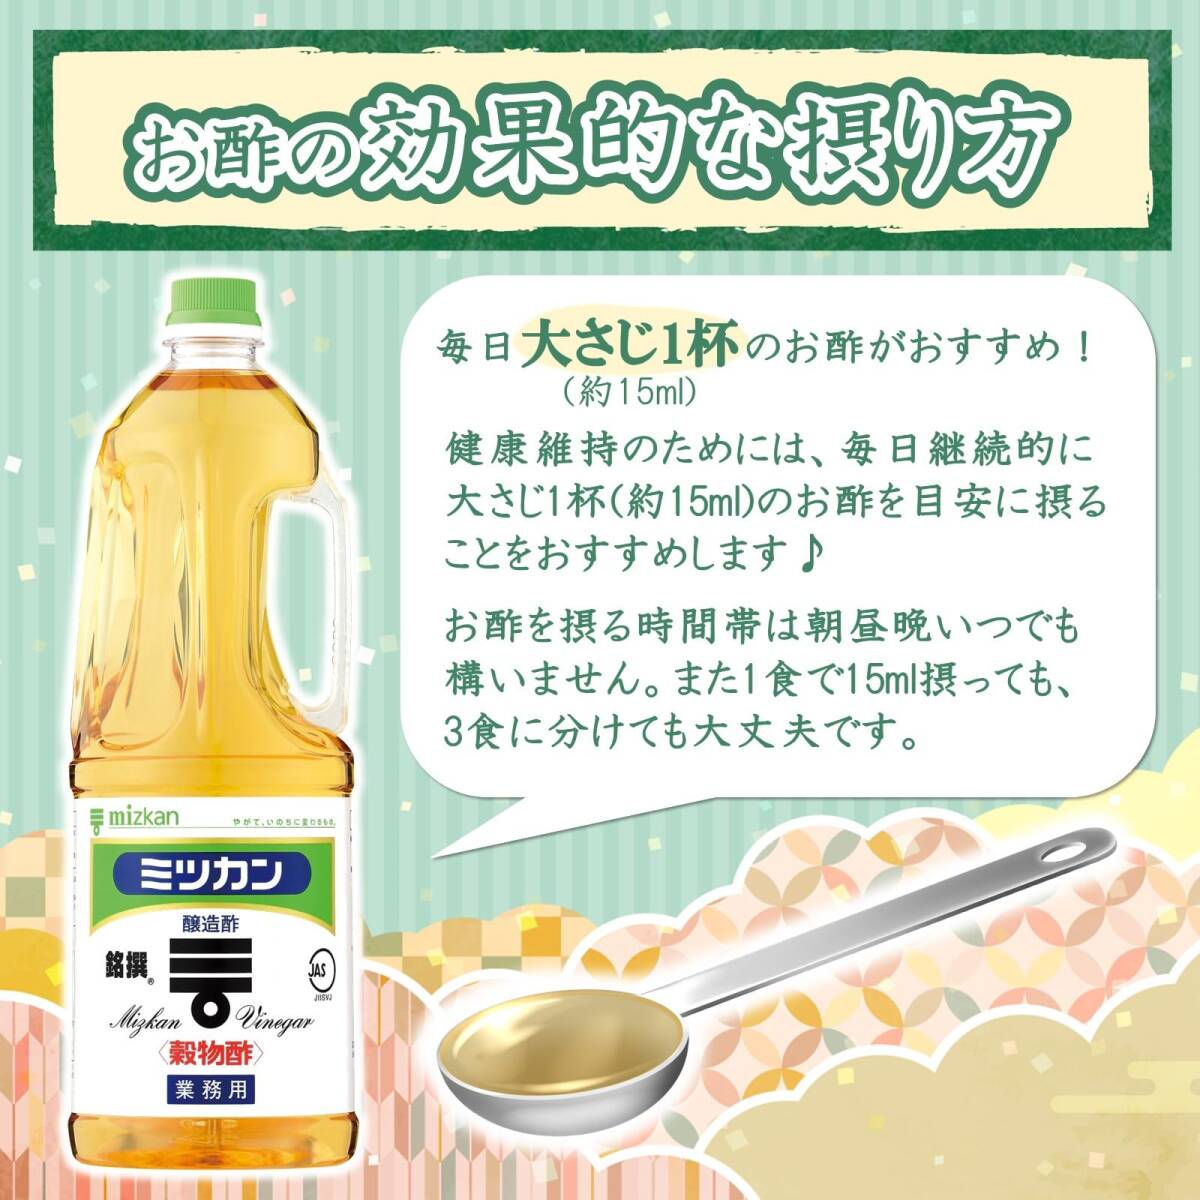 mitsu can . thing vinegar (..) PET bottle 1.8L ×3ps.